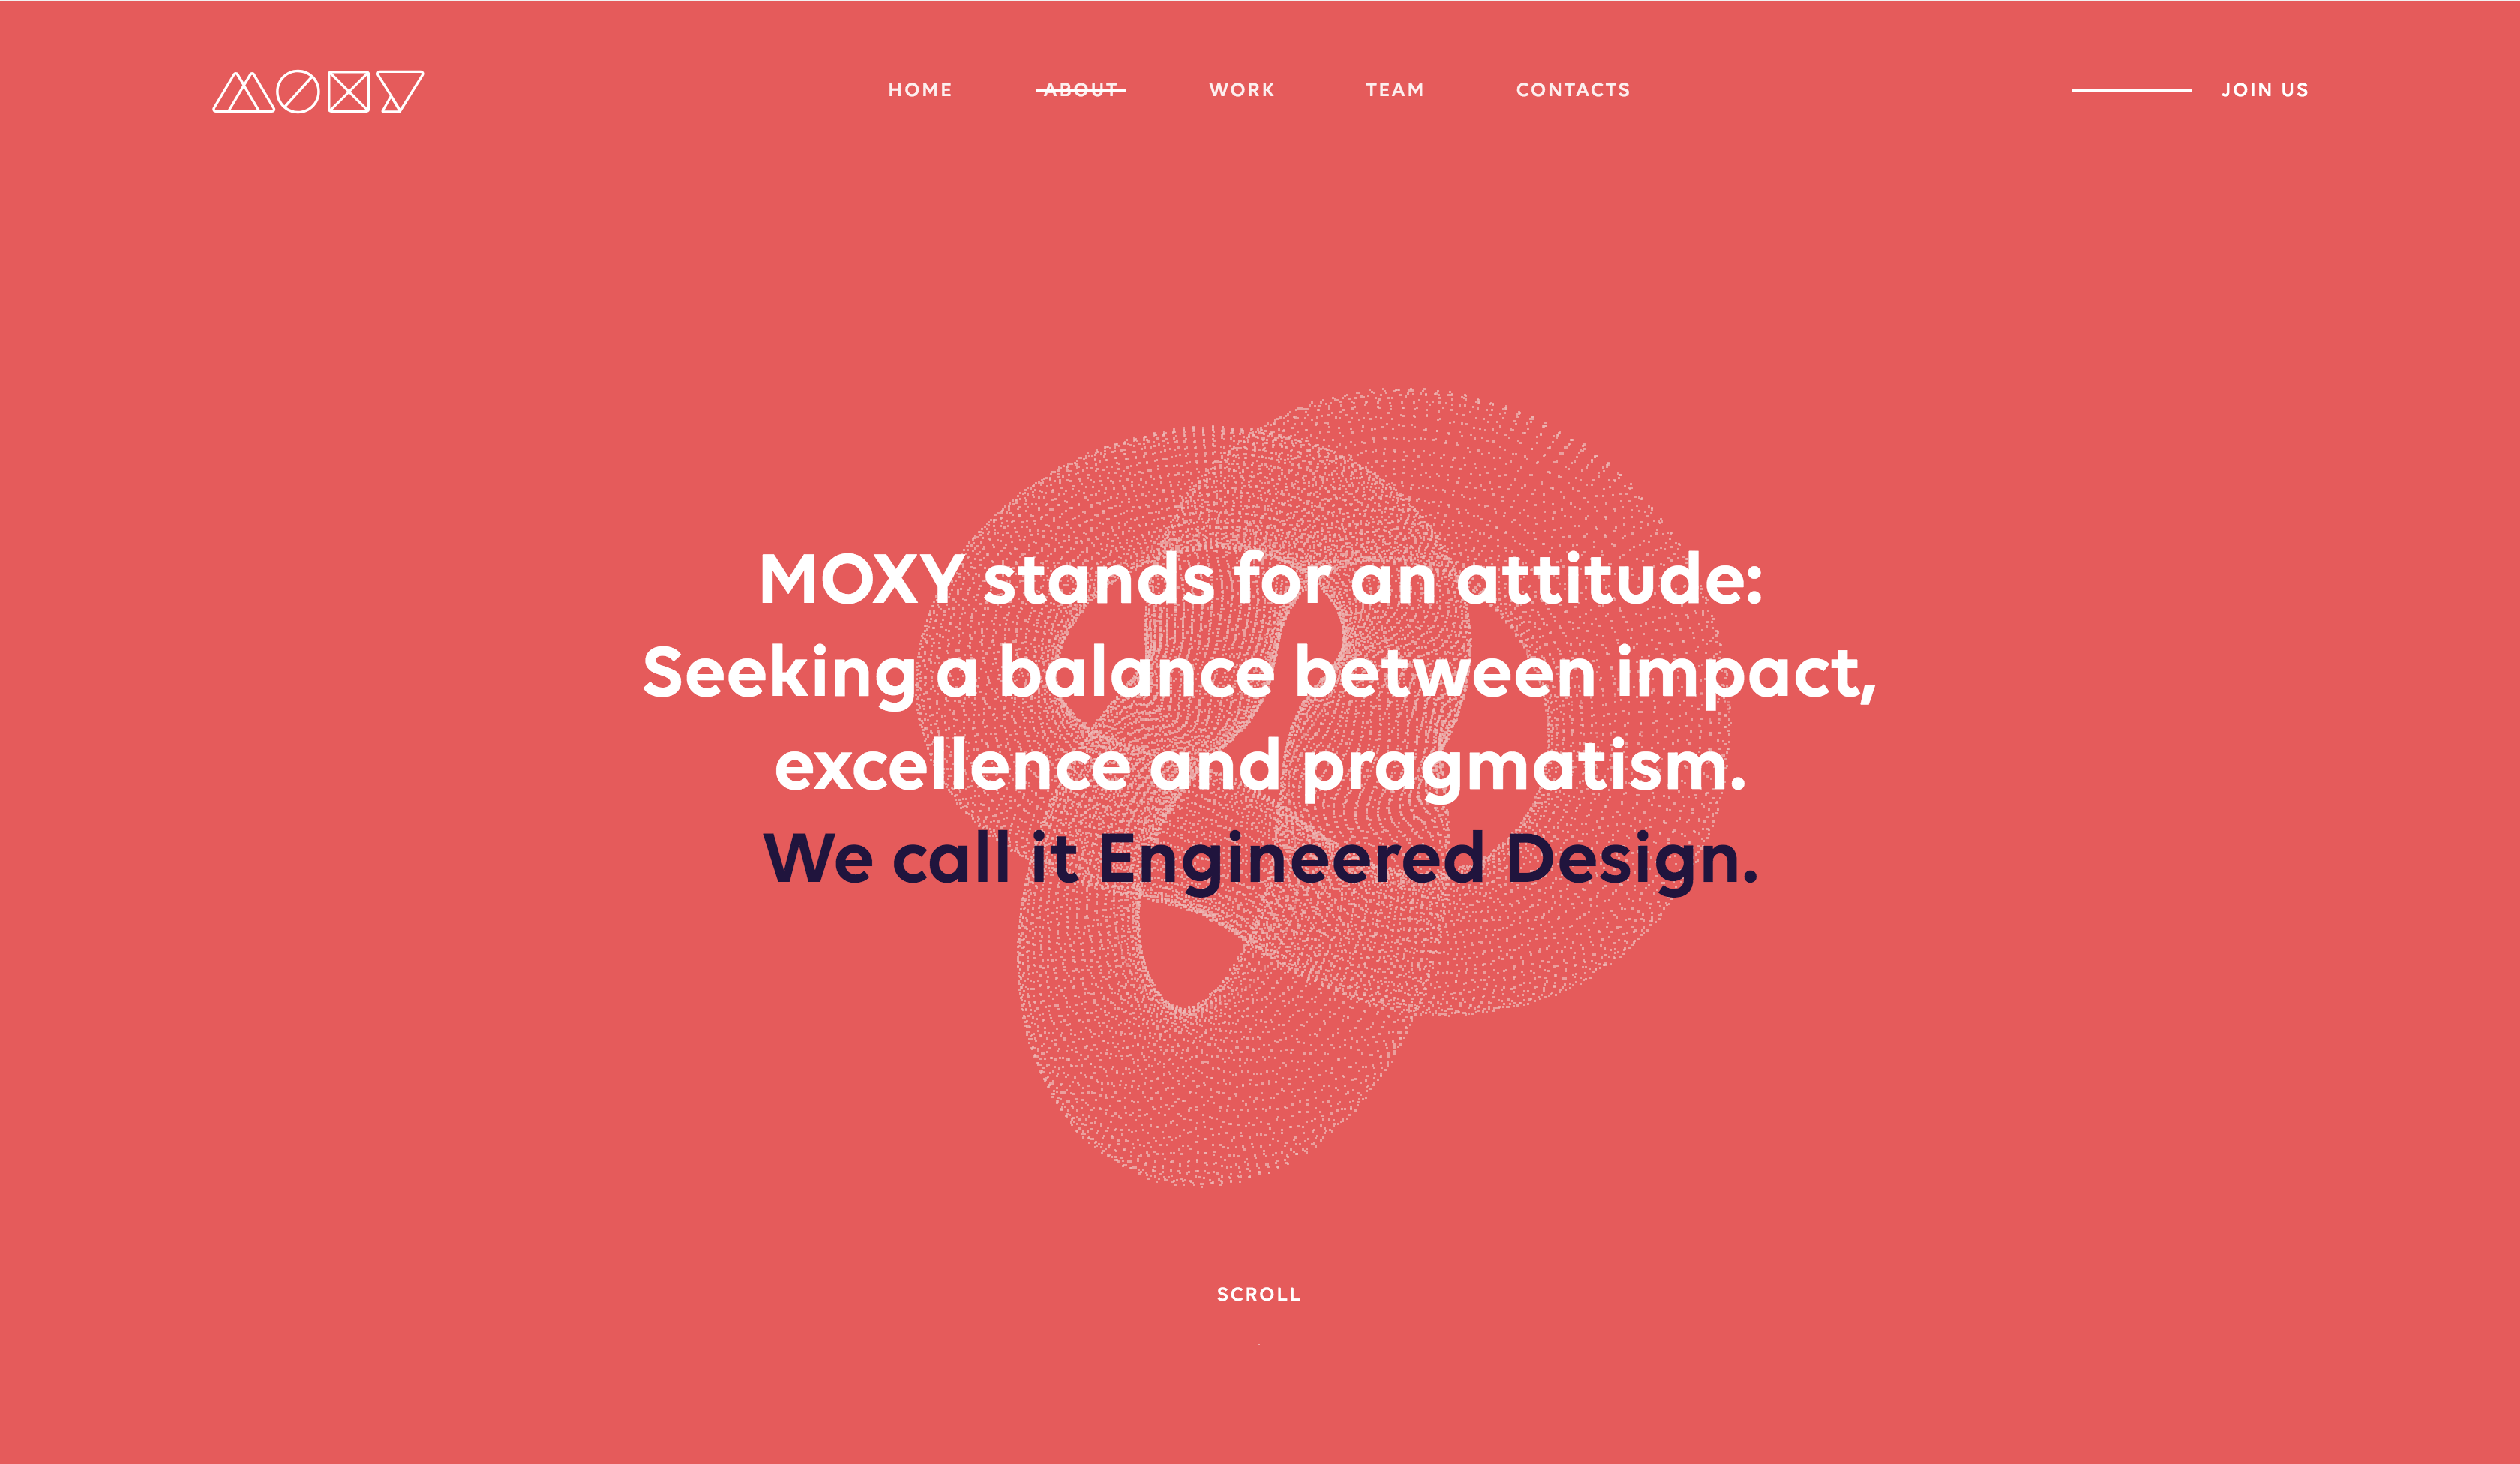 MOXY Studio relaunches with a futuristic website